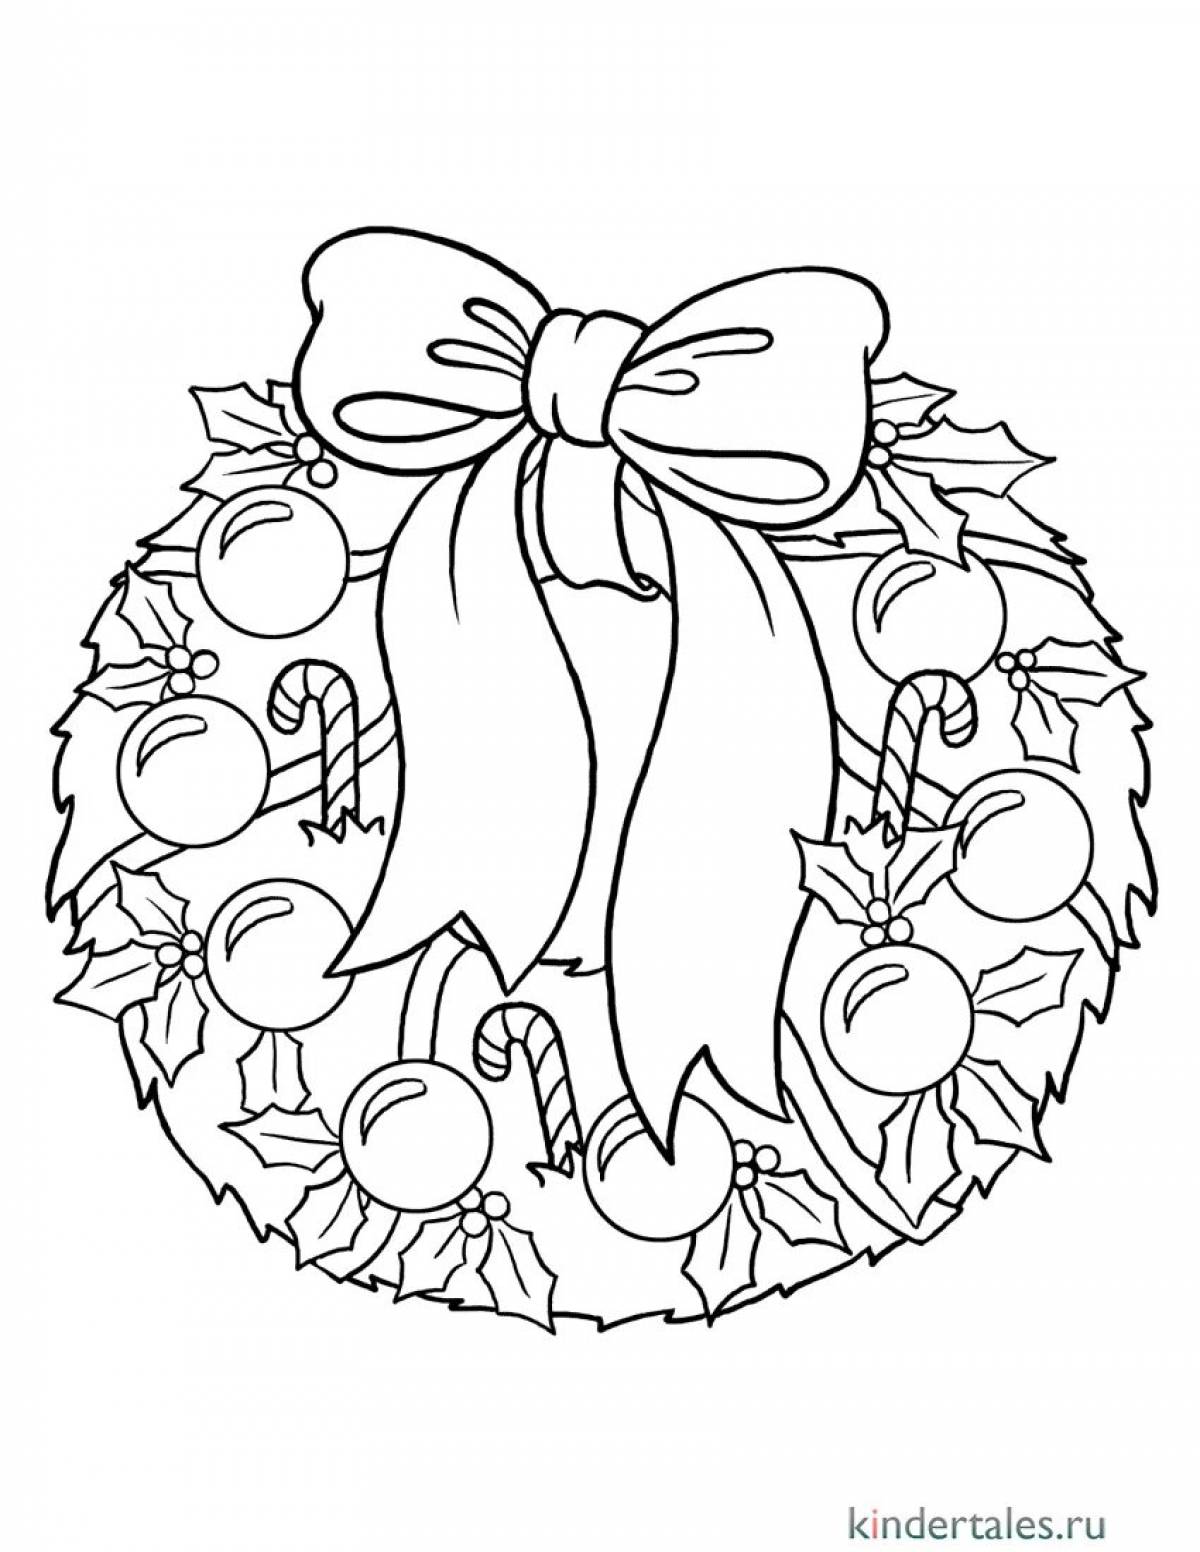 Children's Christmas wreath #3